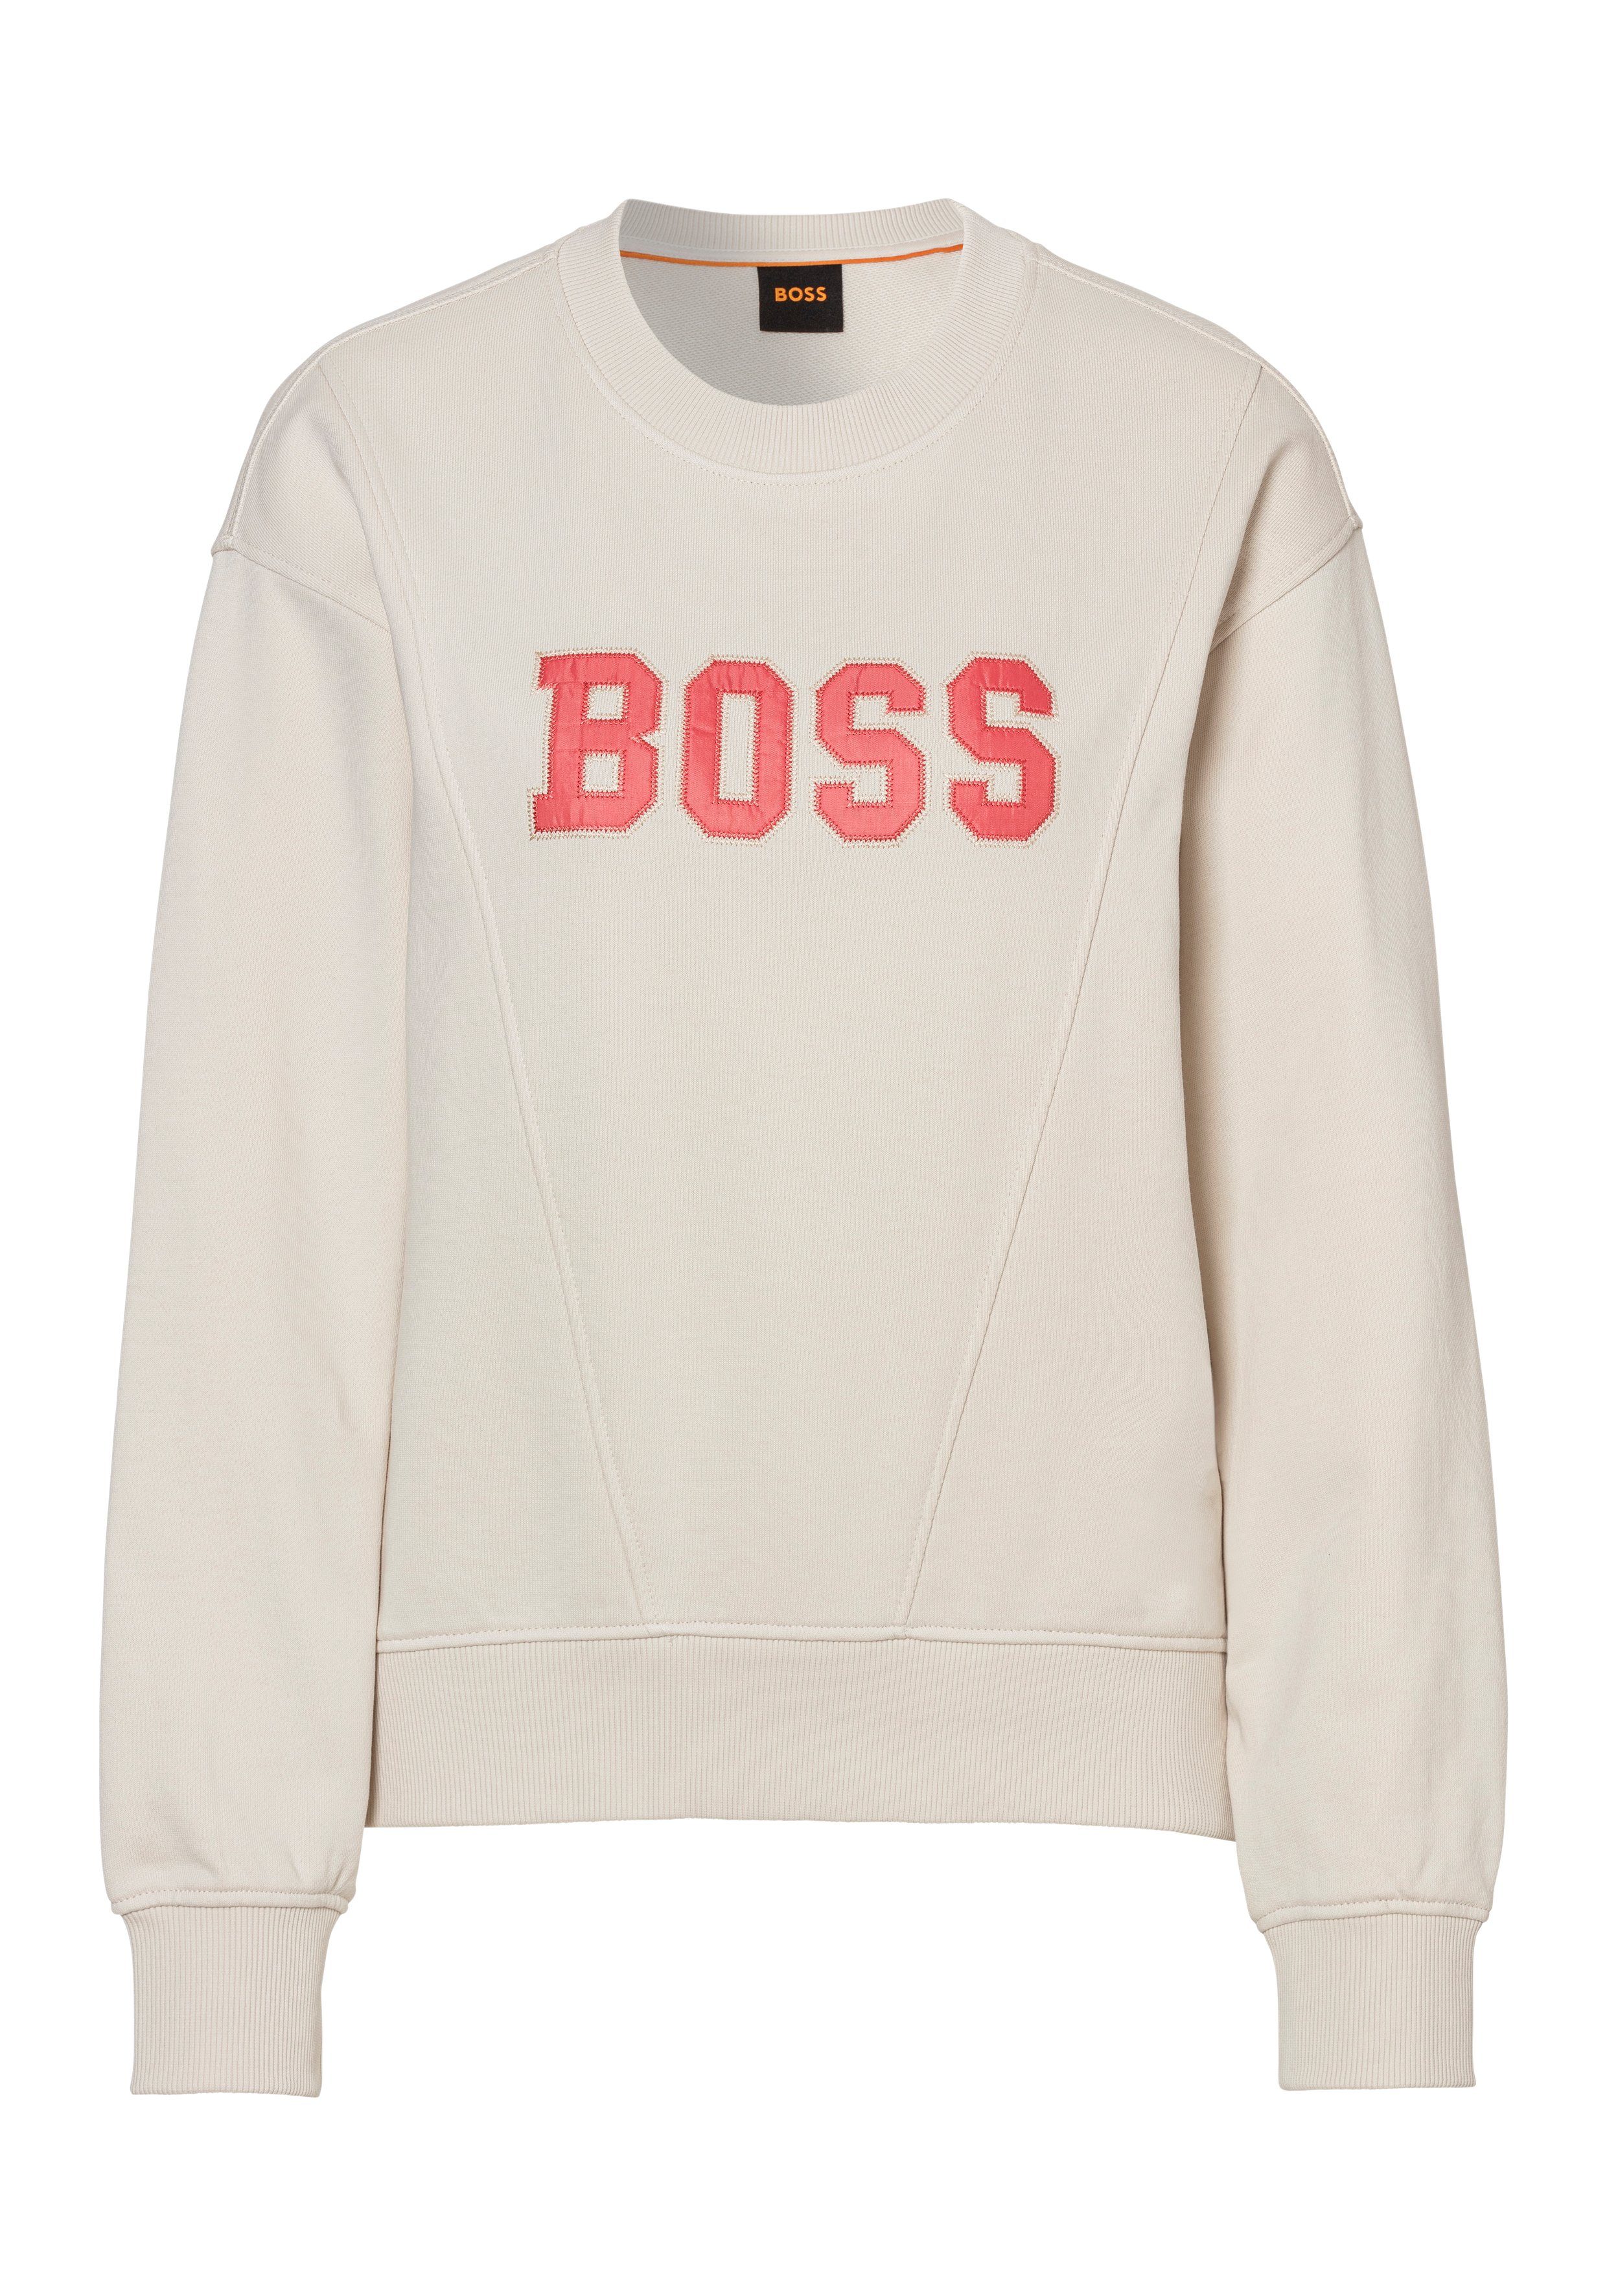 BOSS-Logostickerei BOSS mit C_Eprep_2 weiß ORANGE Sweatshirt